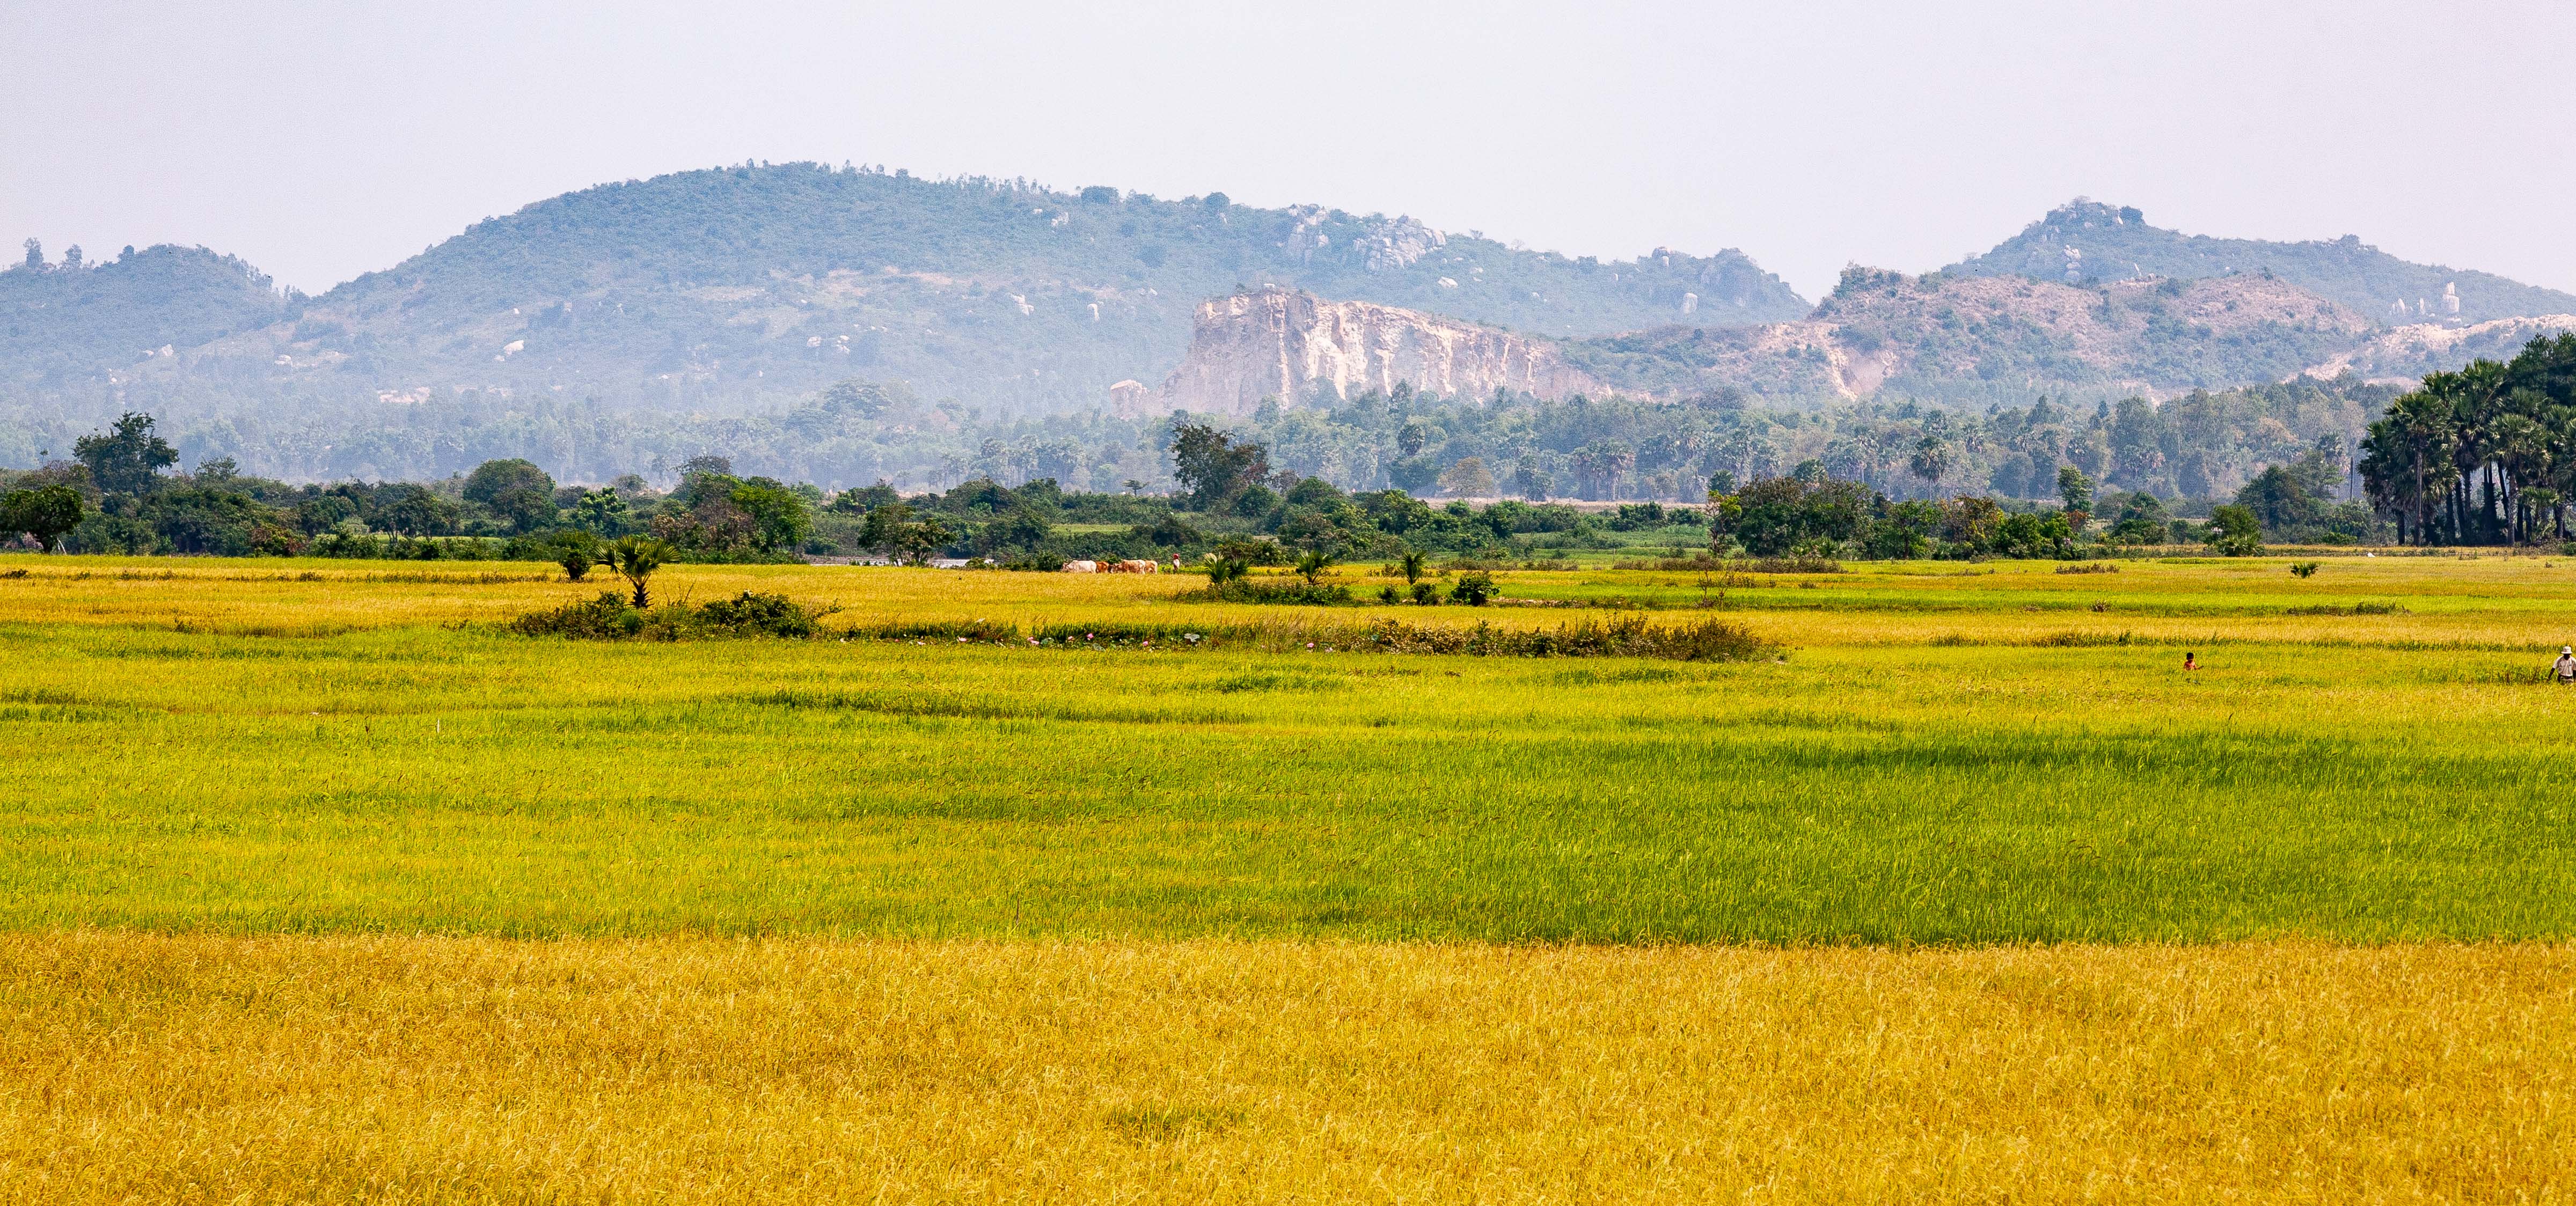 Cambodia, Prey Veaeng Prov, Landscape, 2010, IMG 5188